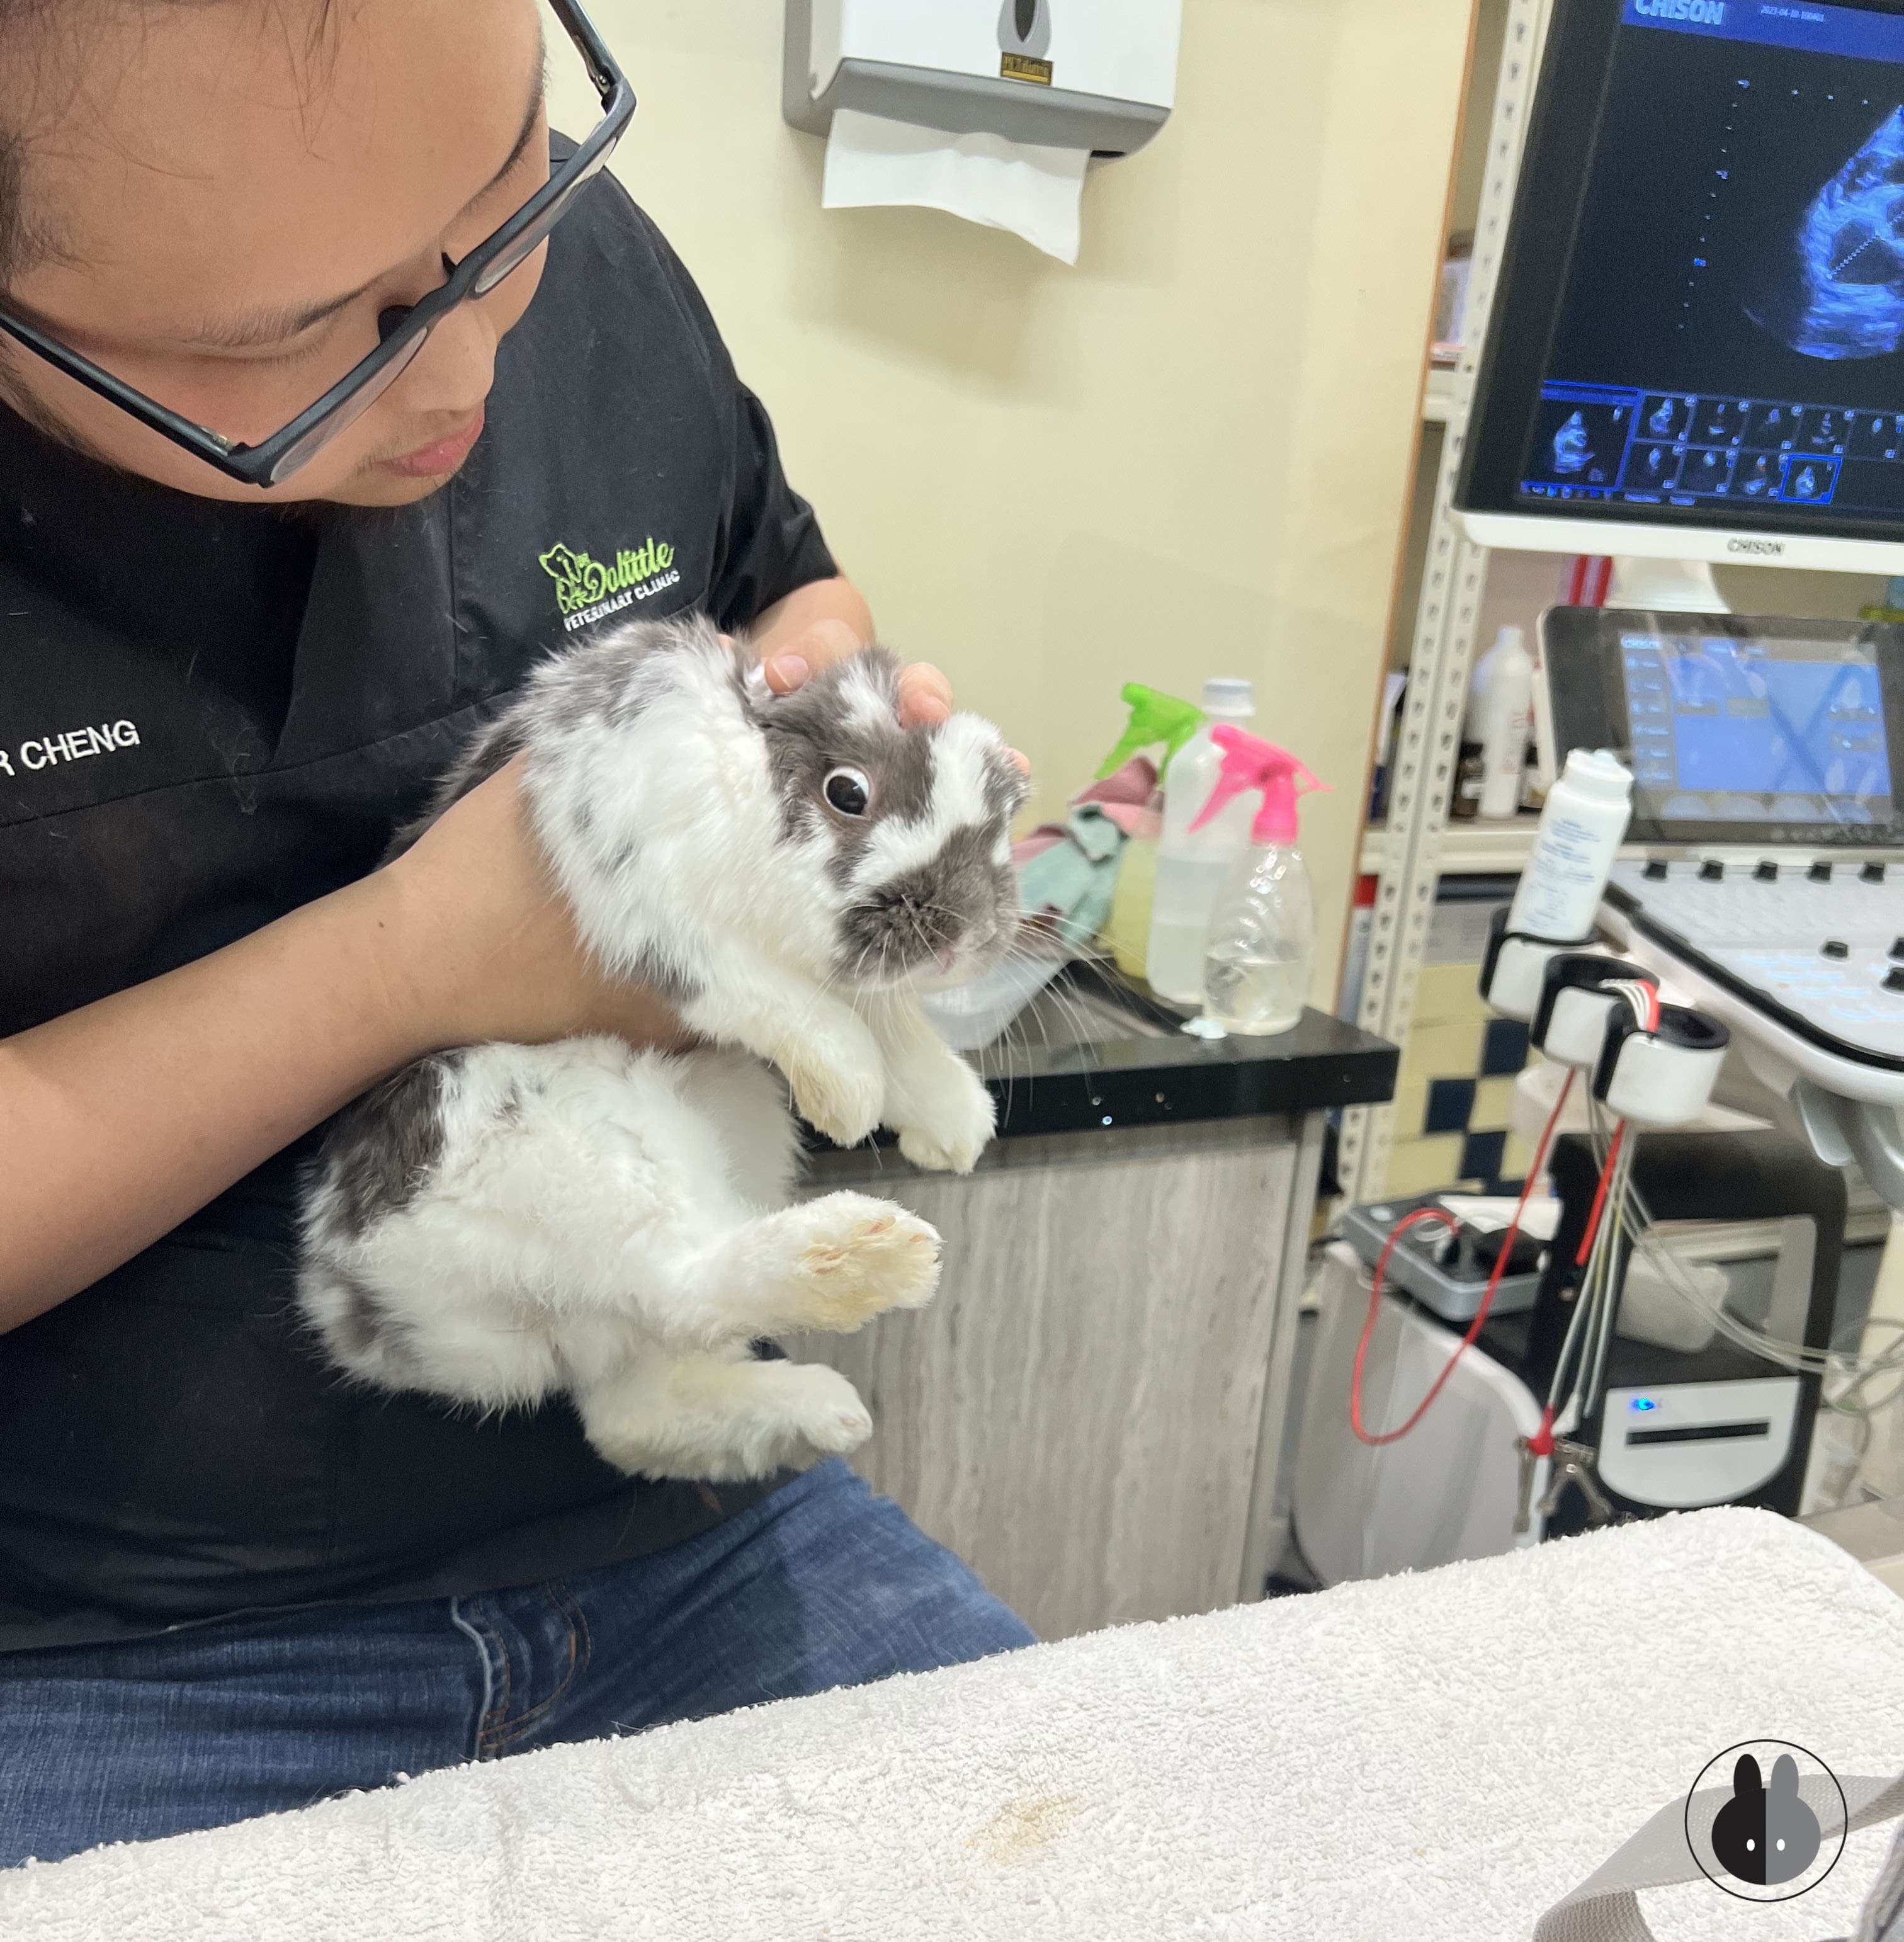 My rabbit getting a medical examination